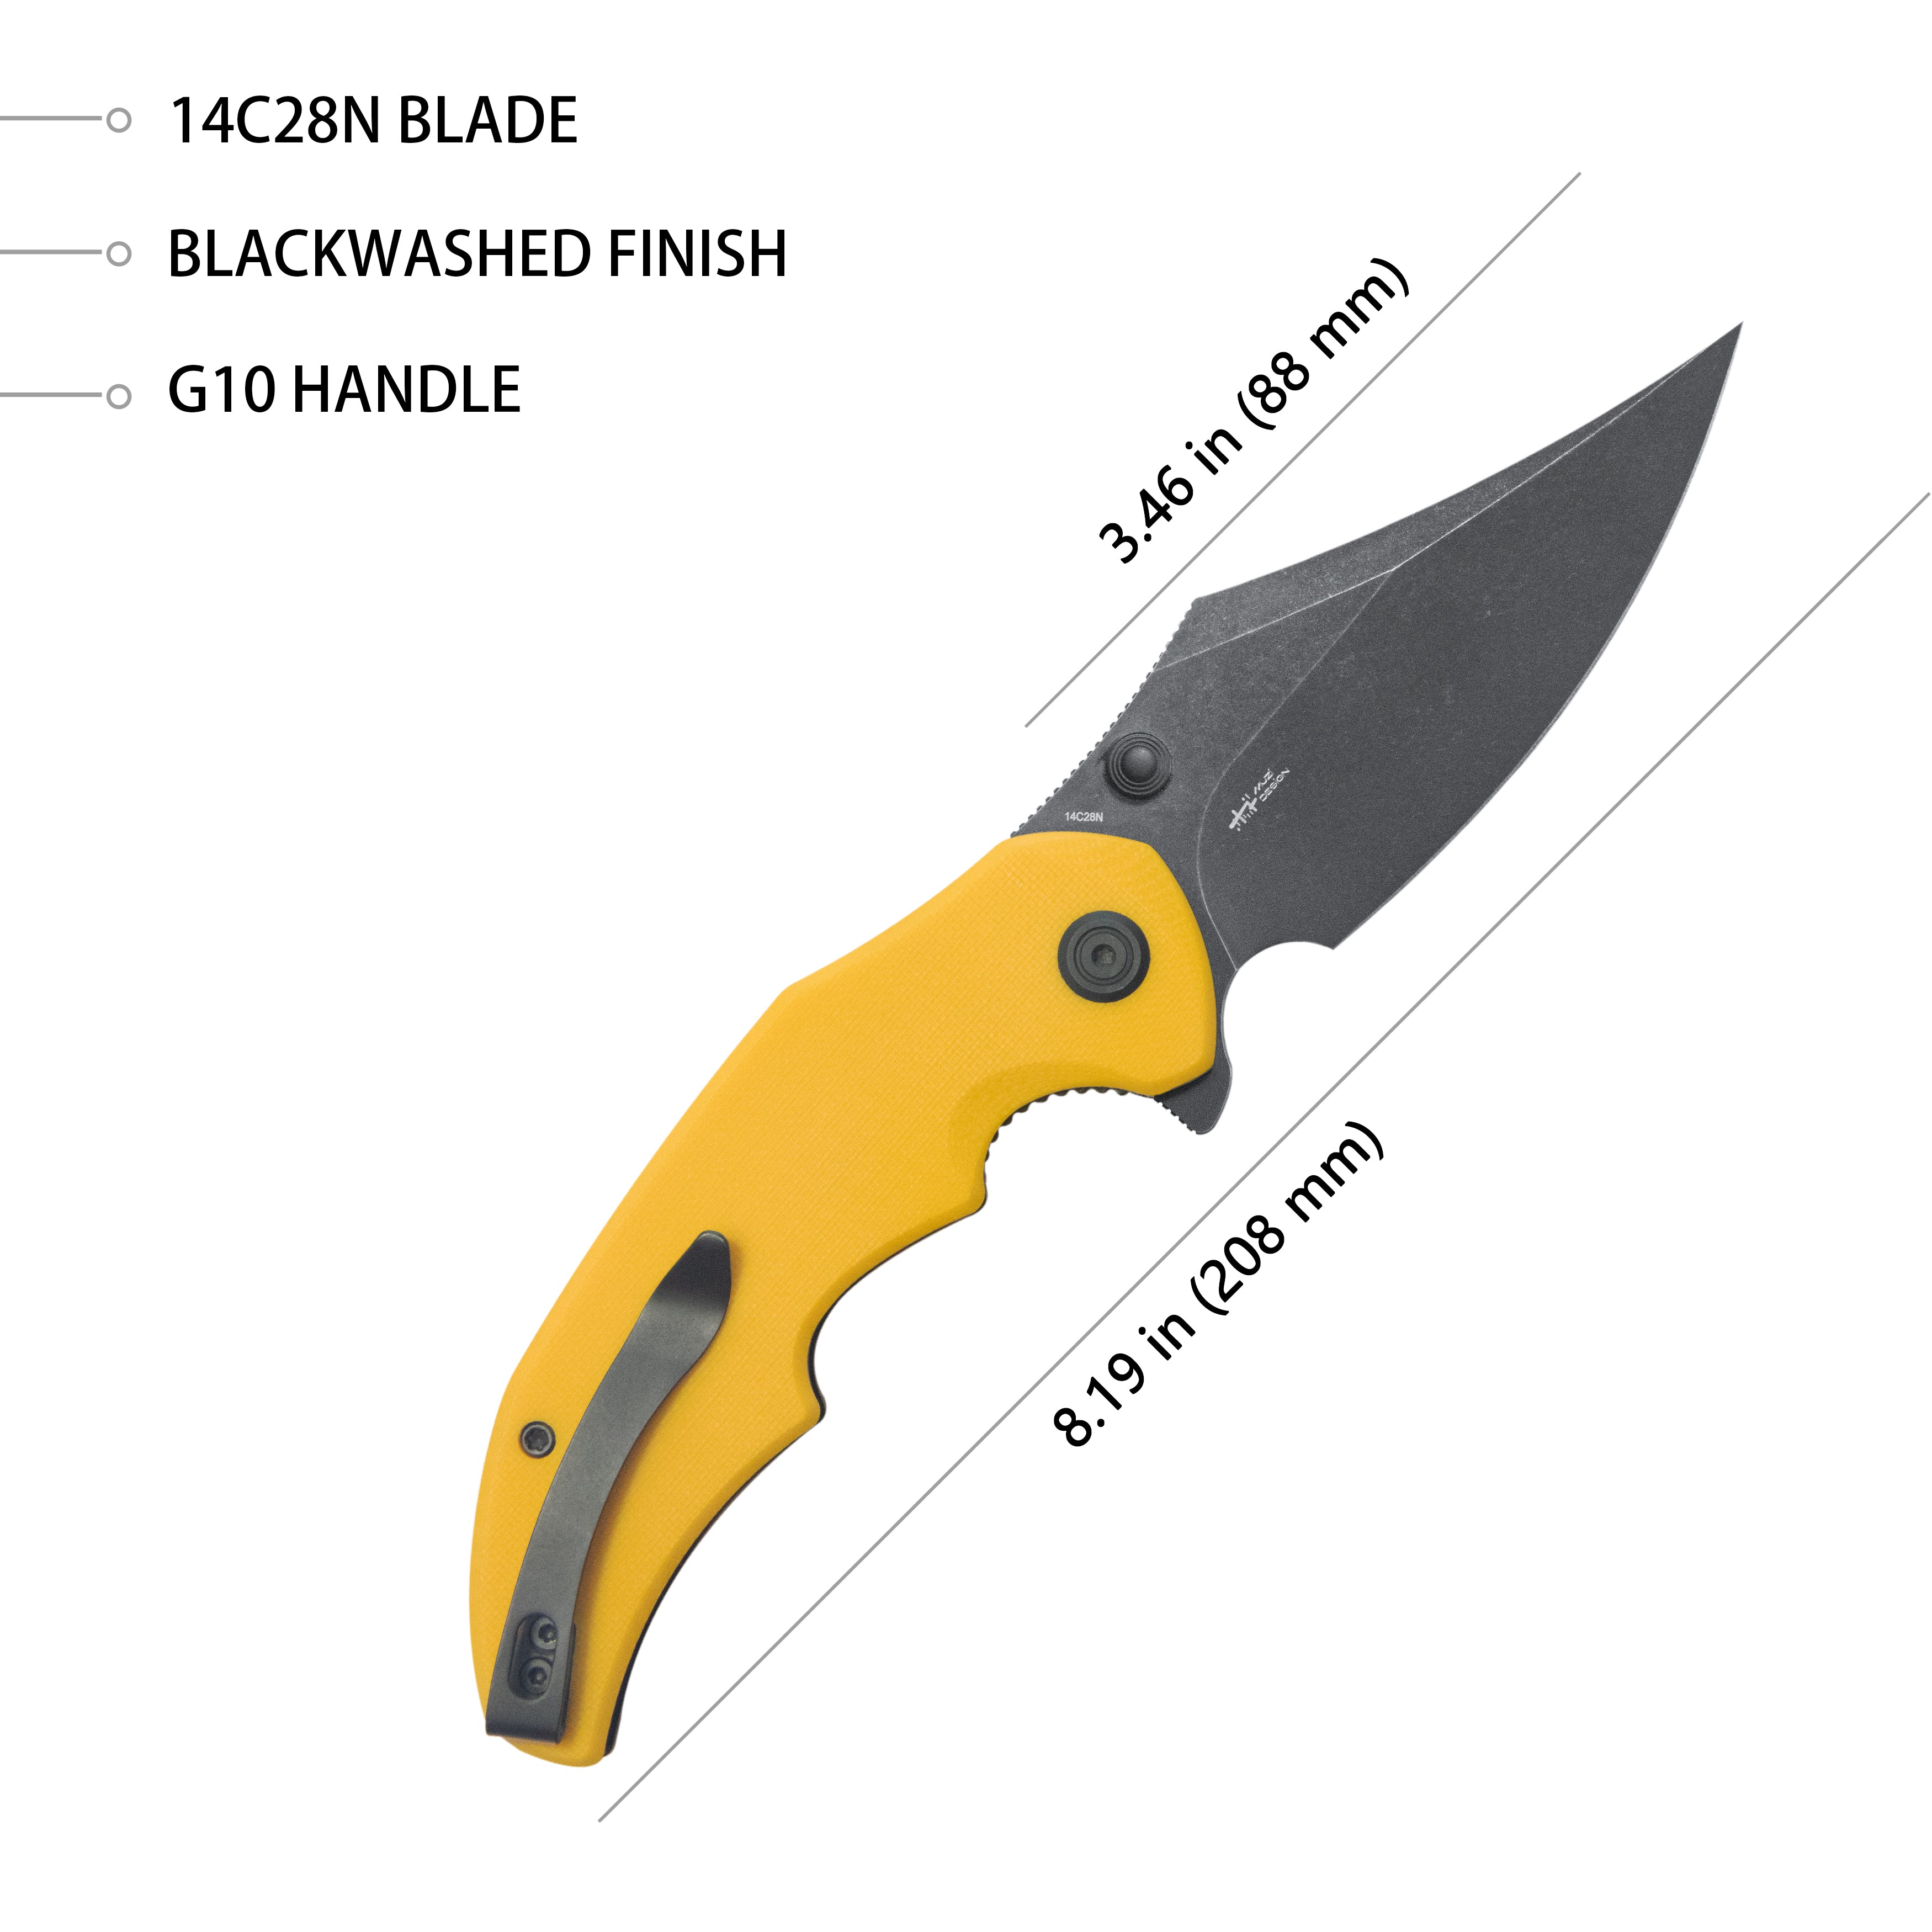 Ceto Flipper Camping Folding Knife Yellow G-10 Handle 3.46" Blackwash 14C28N Blade KU181G